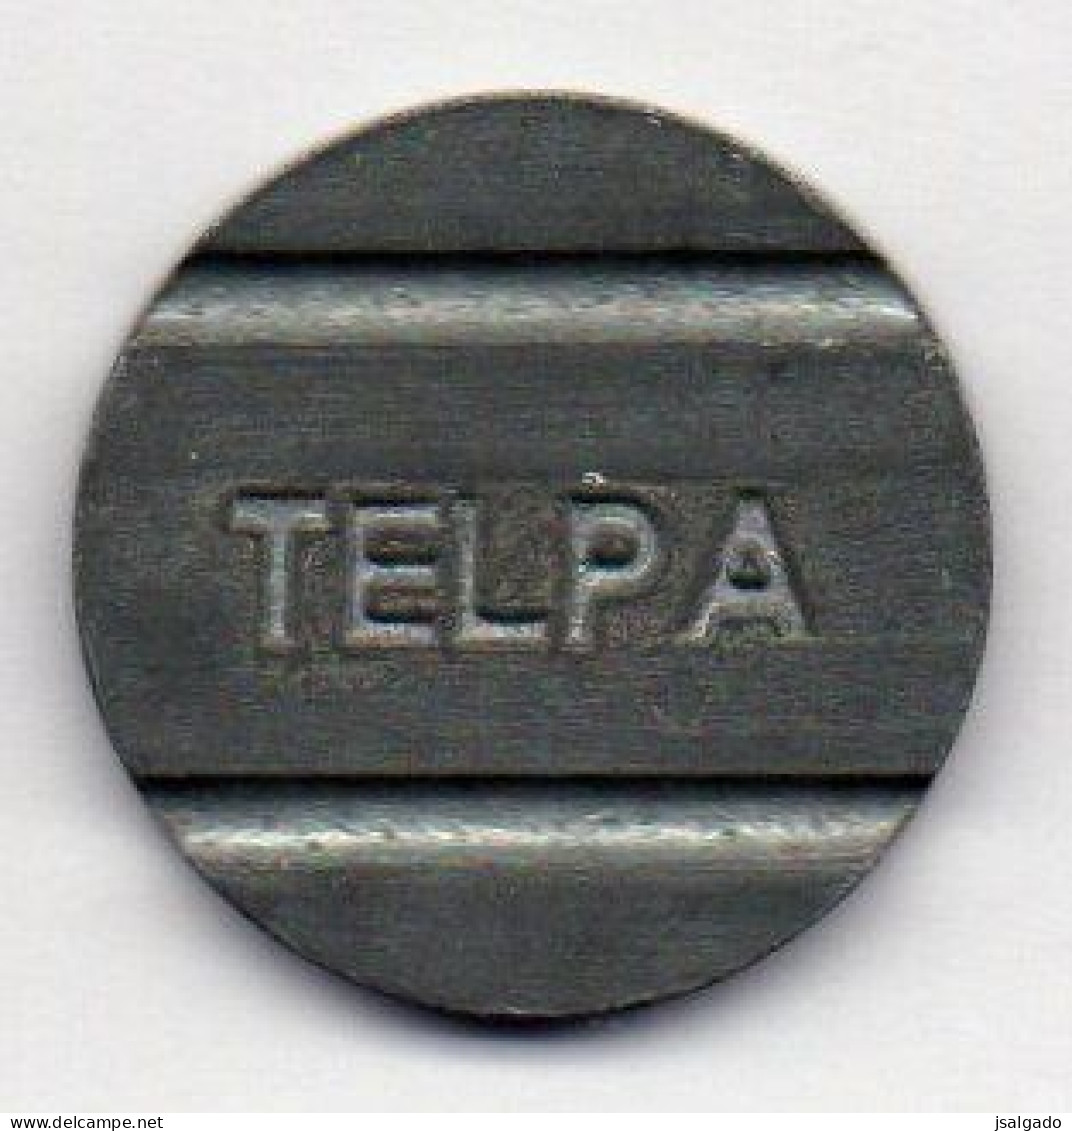 Brasil  Telephone Token  TELPA  /  ARTOL - 79 - Monétaires / De Nécessité